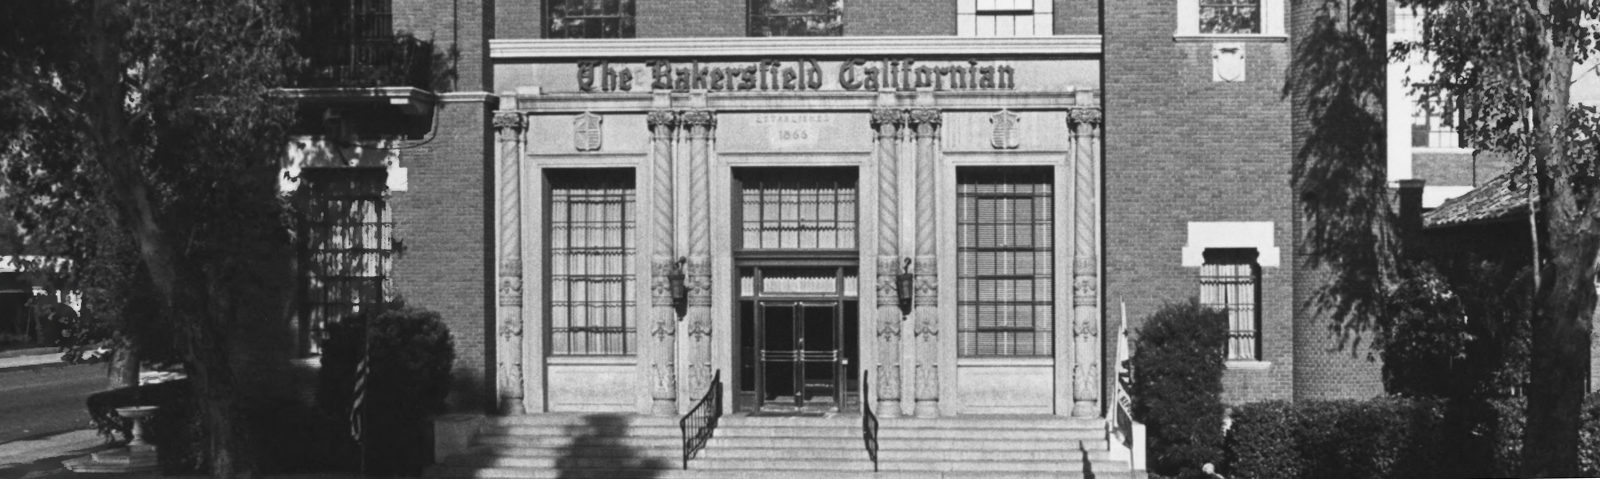 Bakersfield Californian building